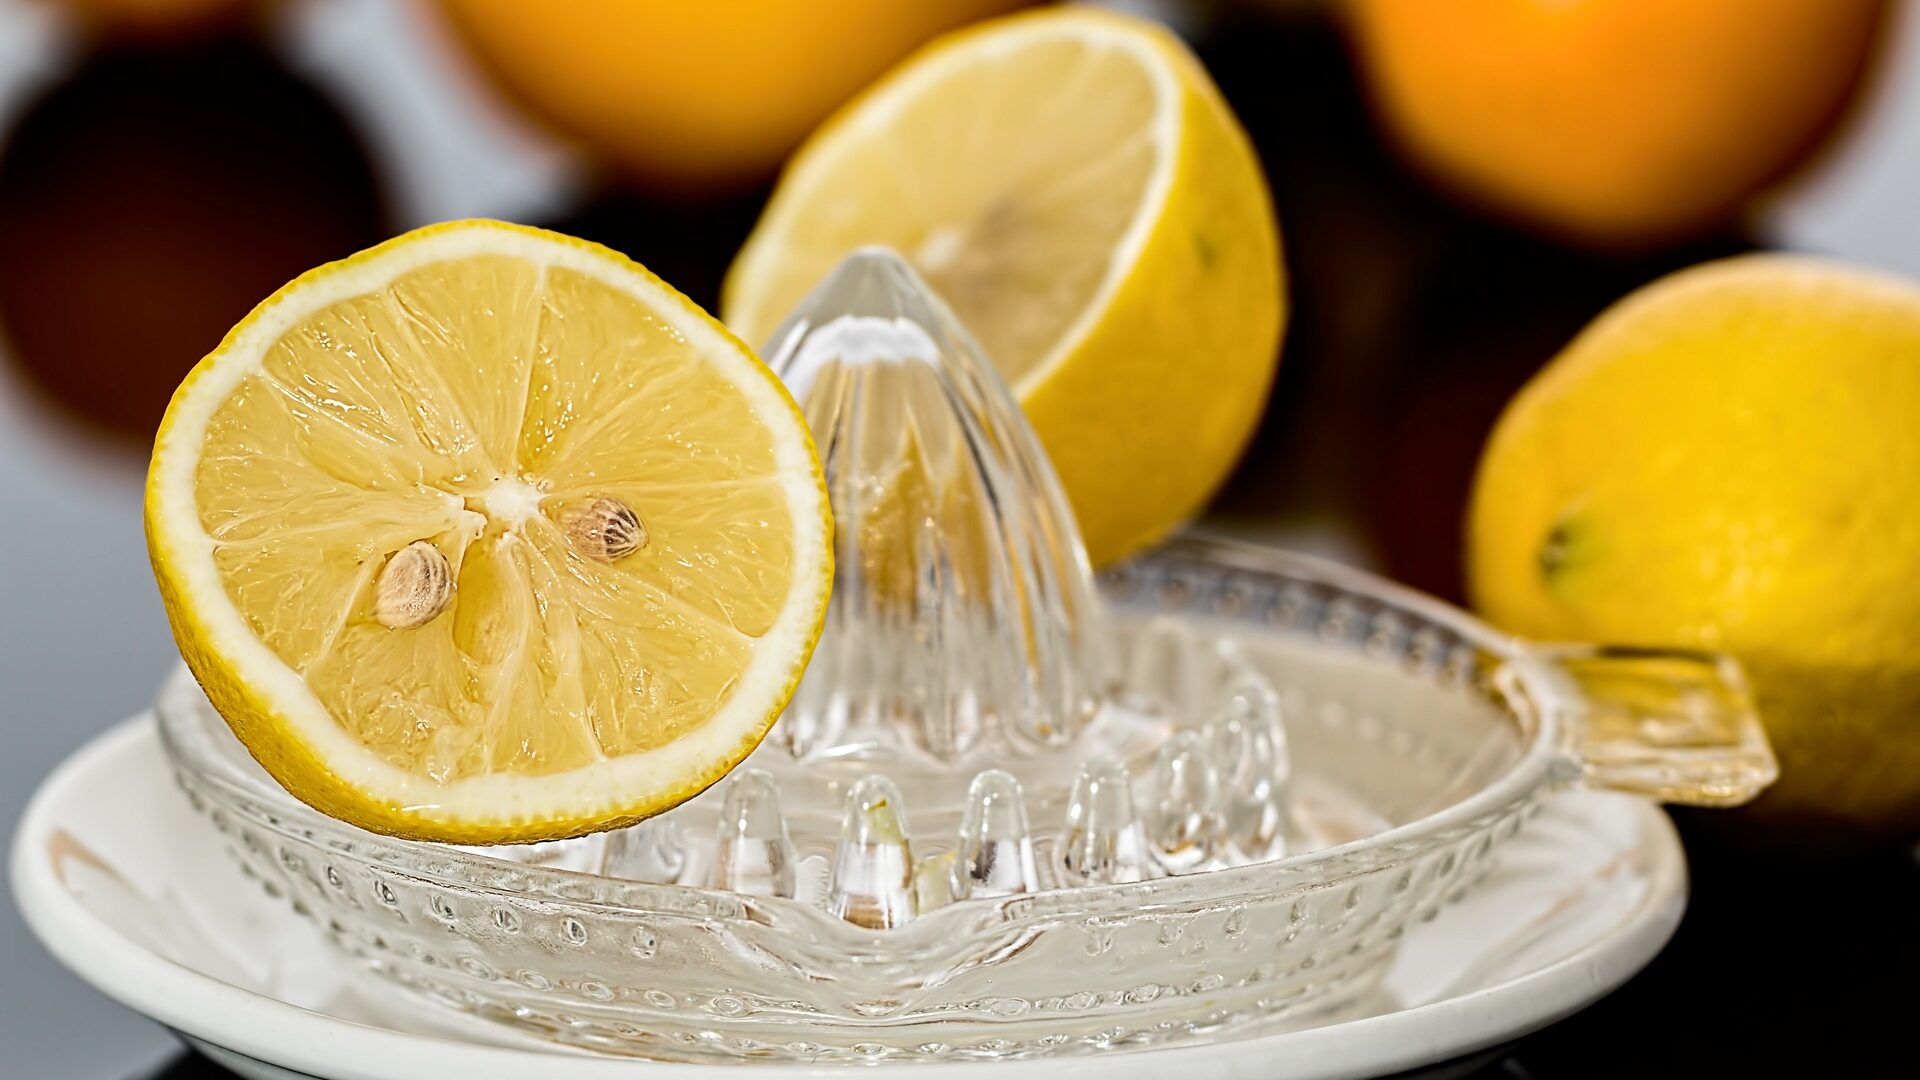 oily skin care - lemon juice 